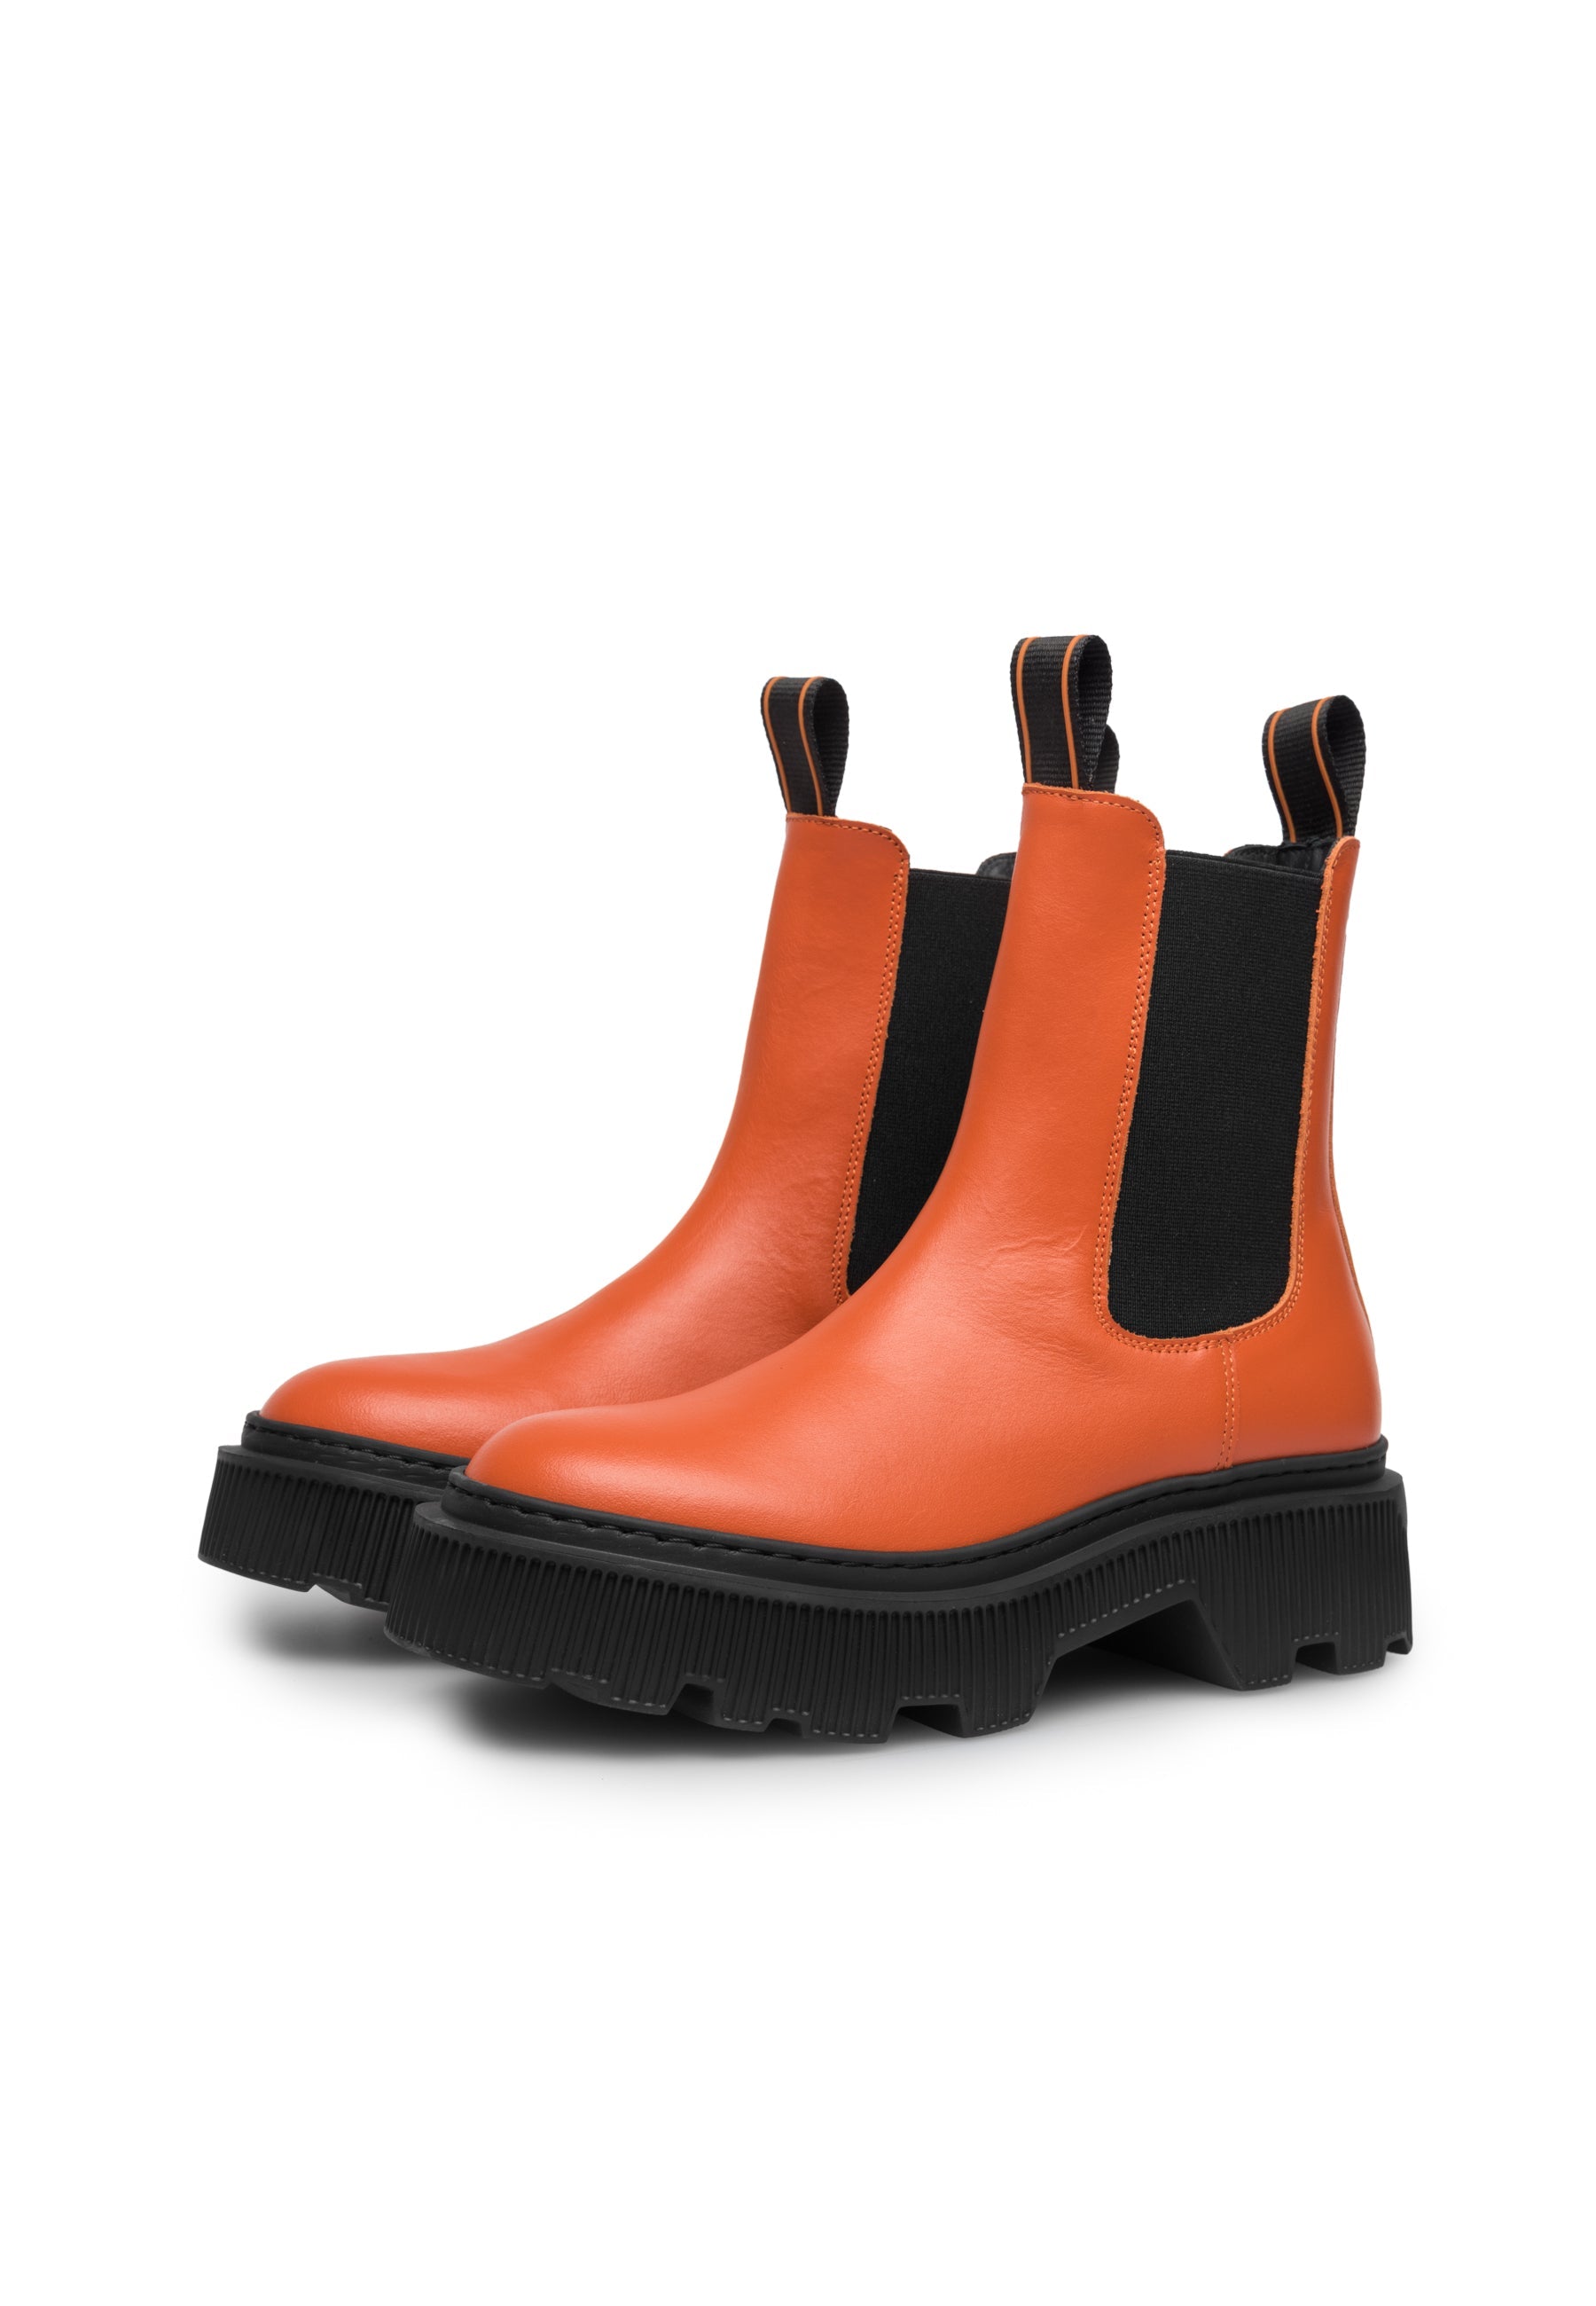 Trixy Orange Chelsea Boots LAST1632 - 3